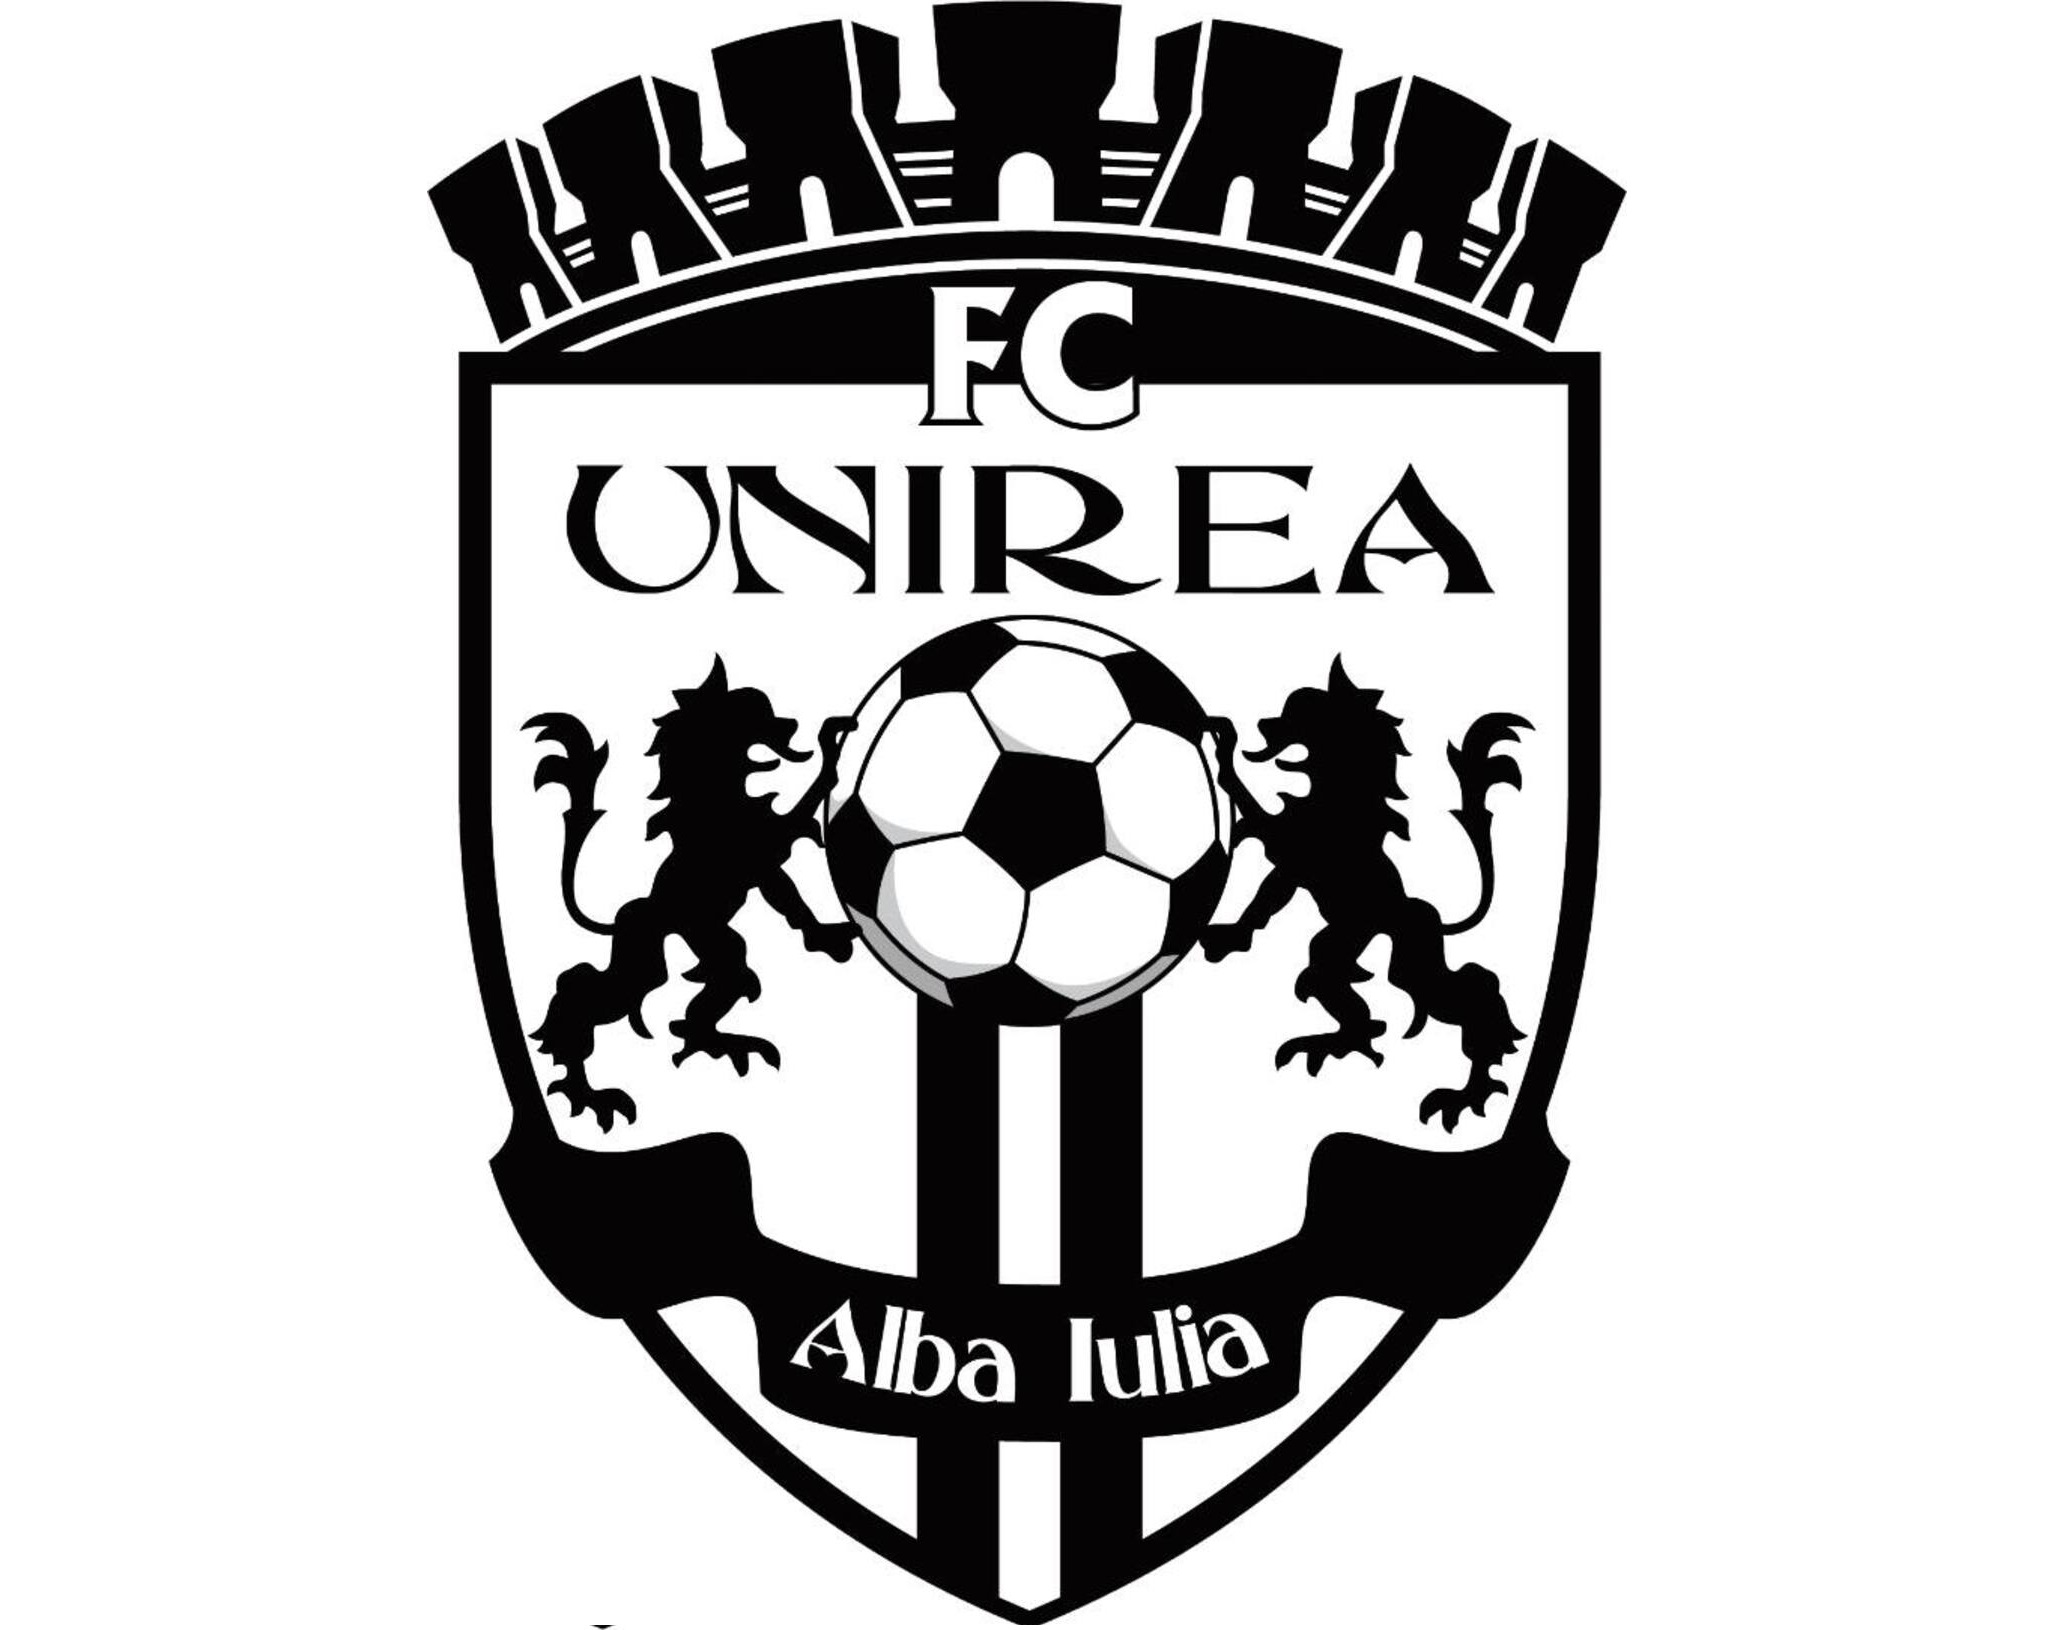 FC Unirea Alba Iulia: 14 Football Club Facts - Facts.net